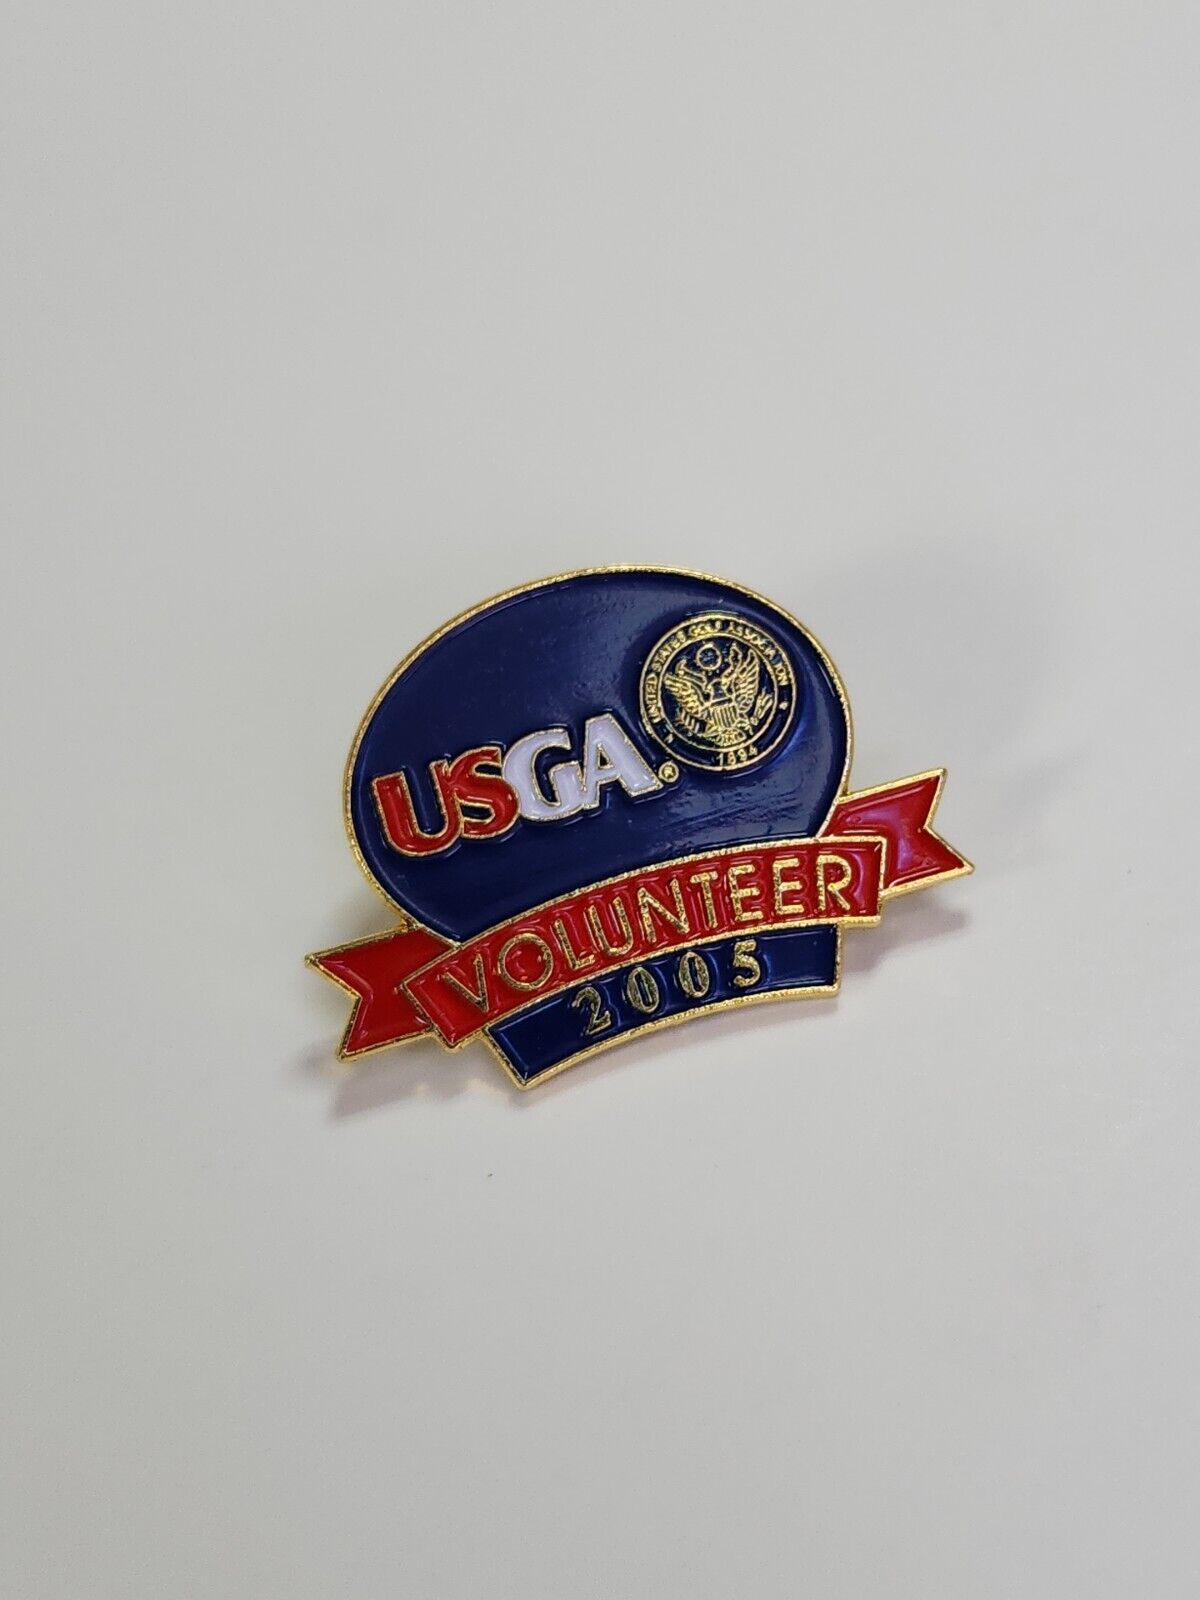 USGA Volunteer 2005 Lapel Pin United States Golf Association 